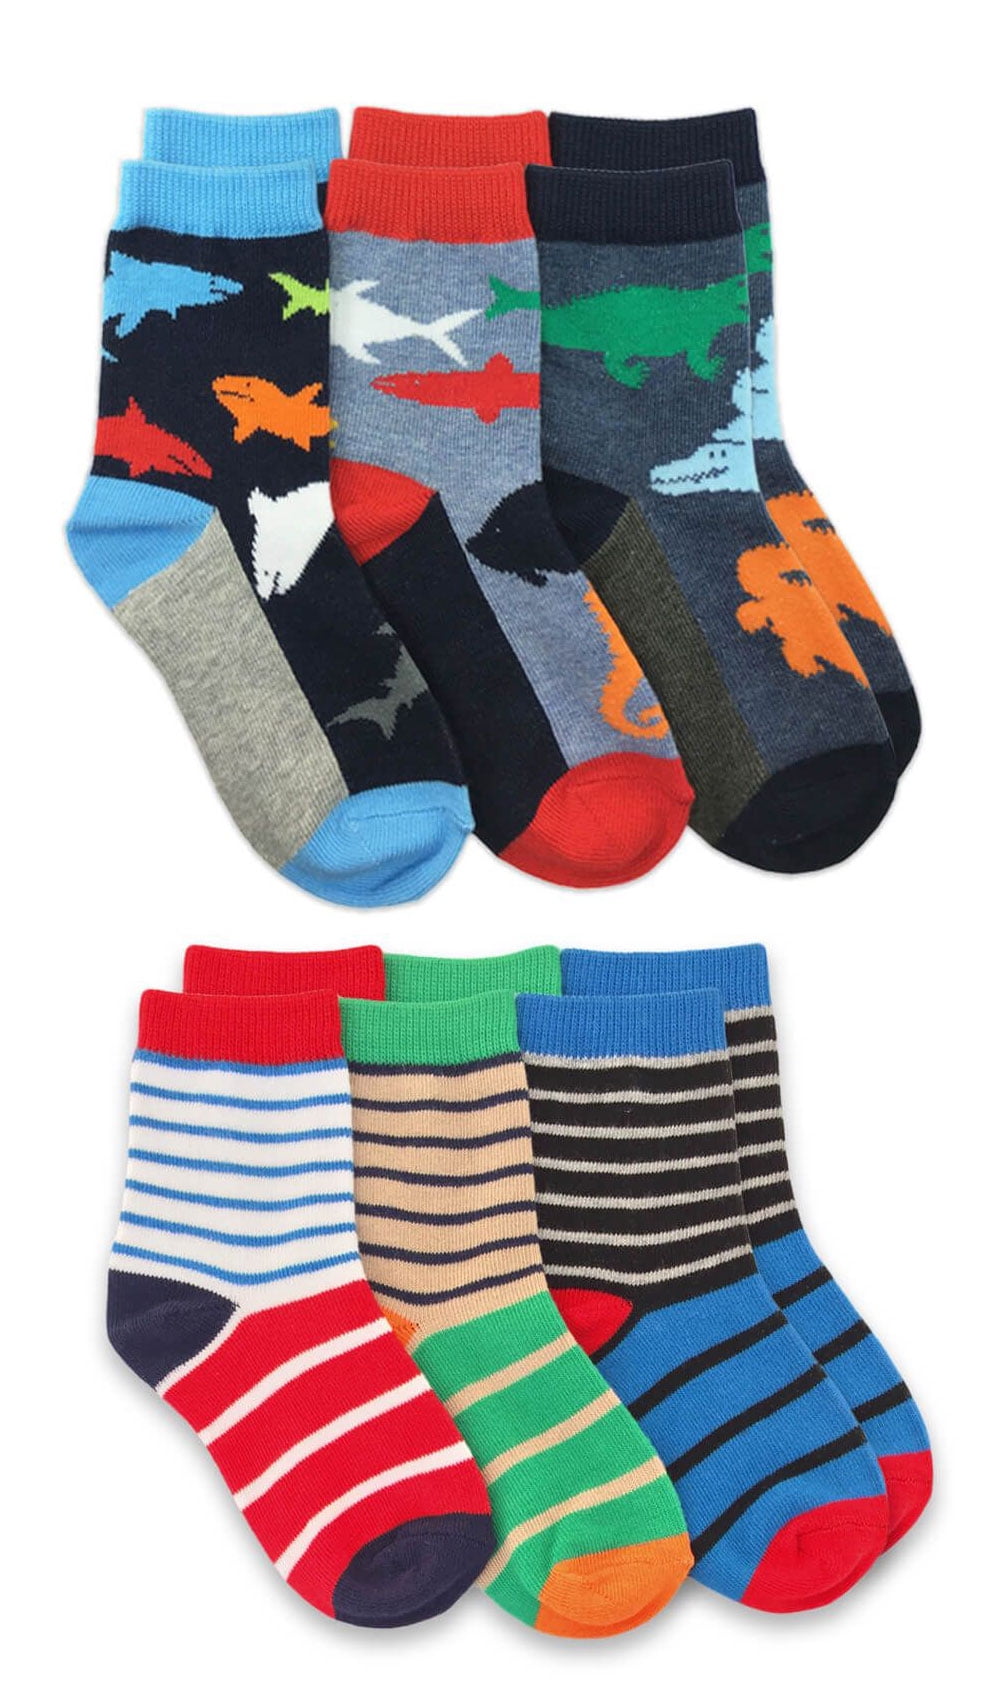 Jefferies Socks Boys Socks, 6 Pack Sharks Stripes Fashion Pattern Crew  Sizes XS and S 